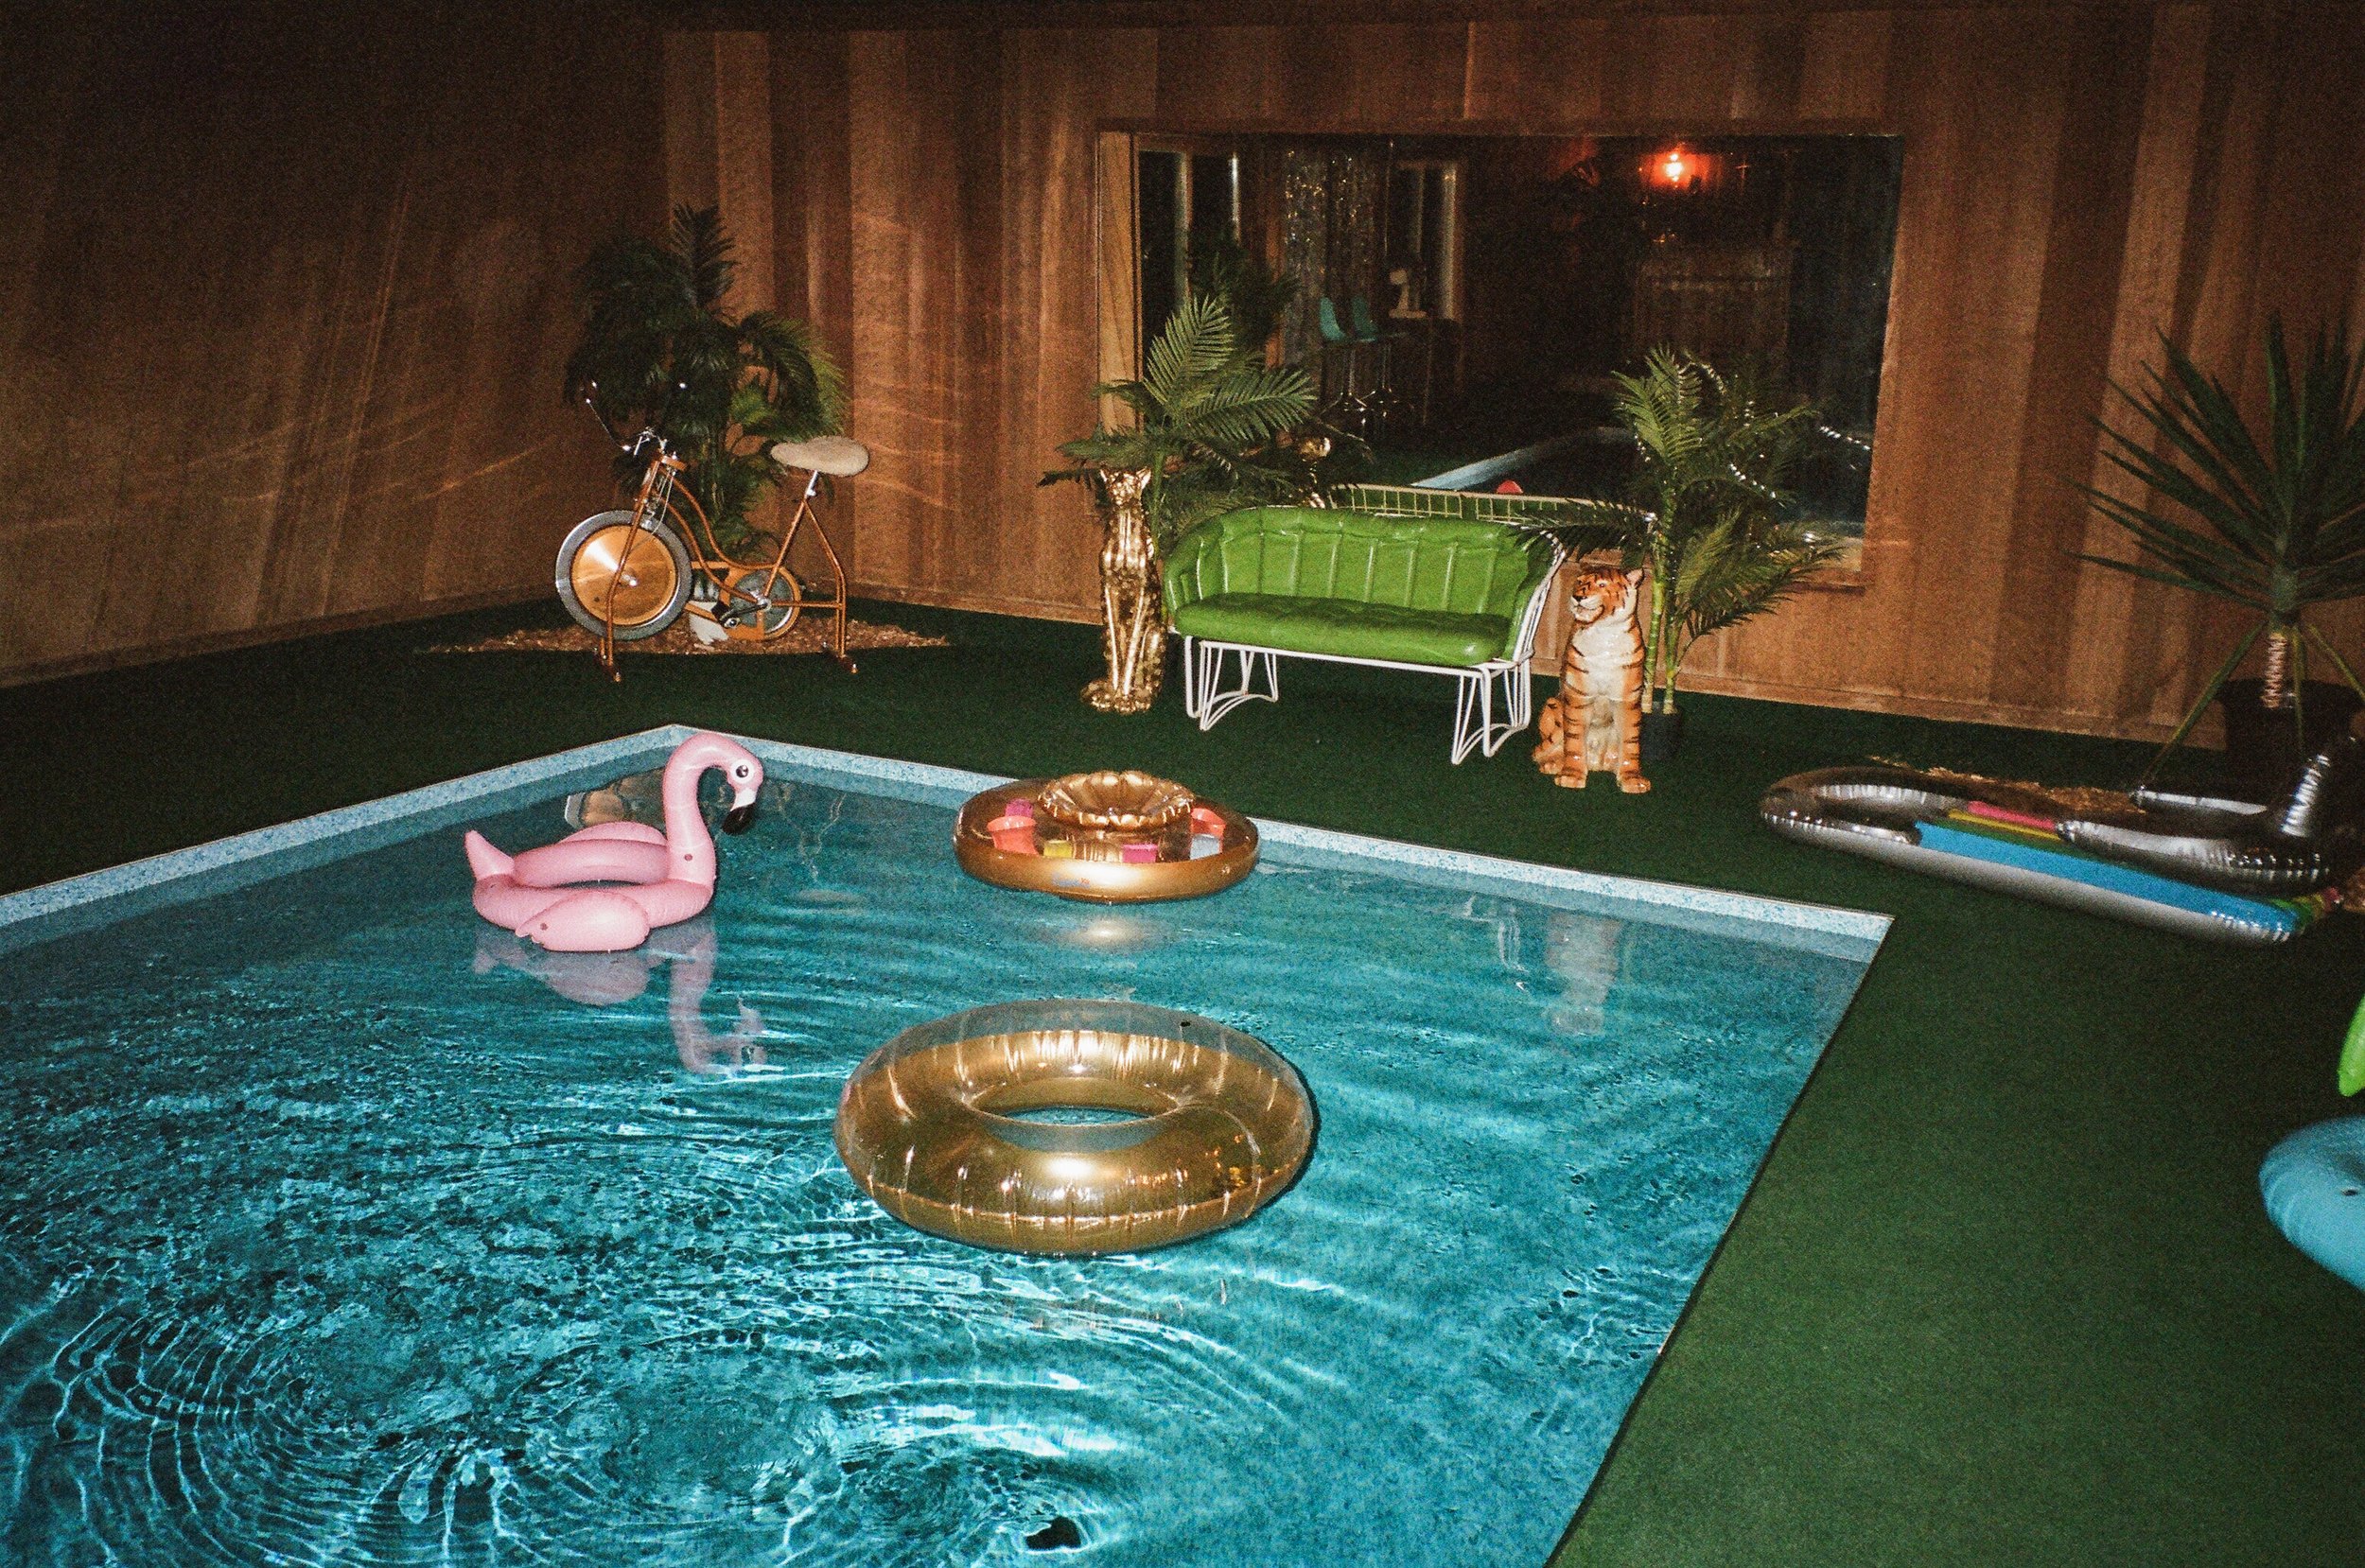 grandpas-pool-house-x-nylonsaddle-analog-2021-82.jpg